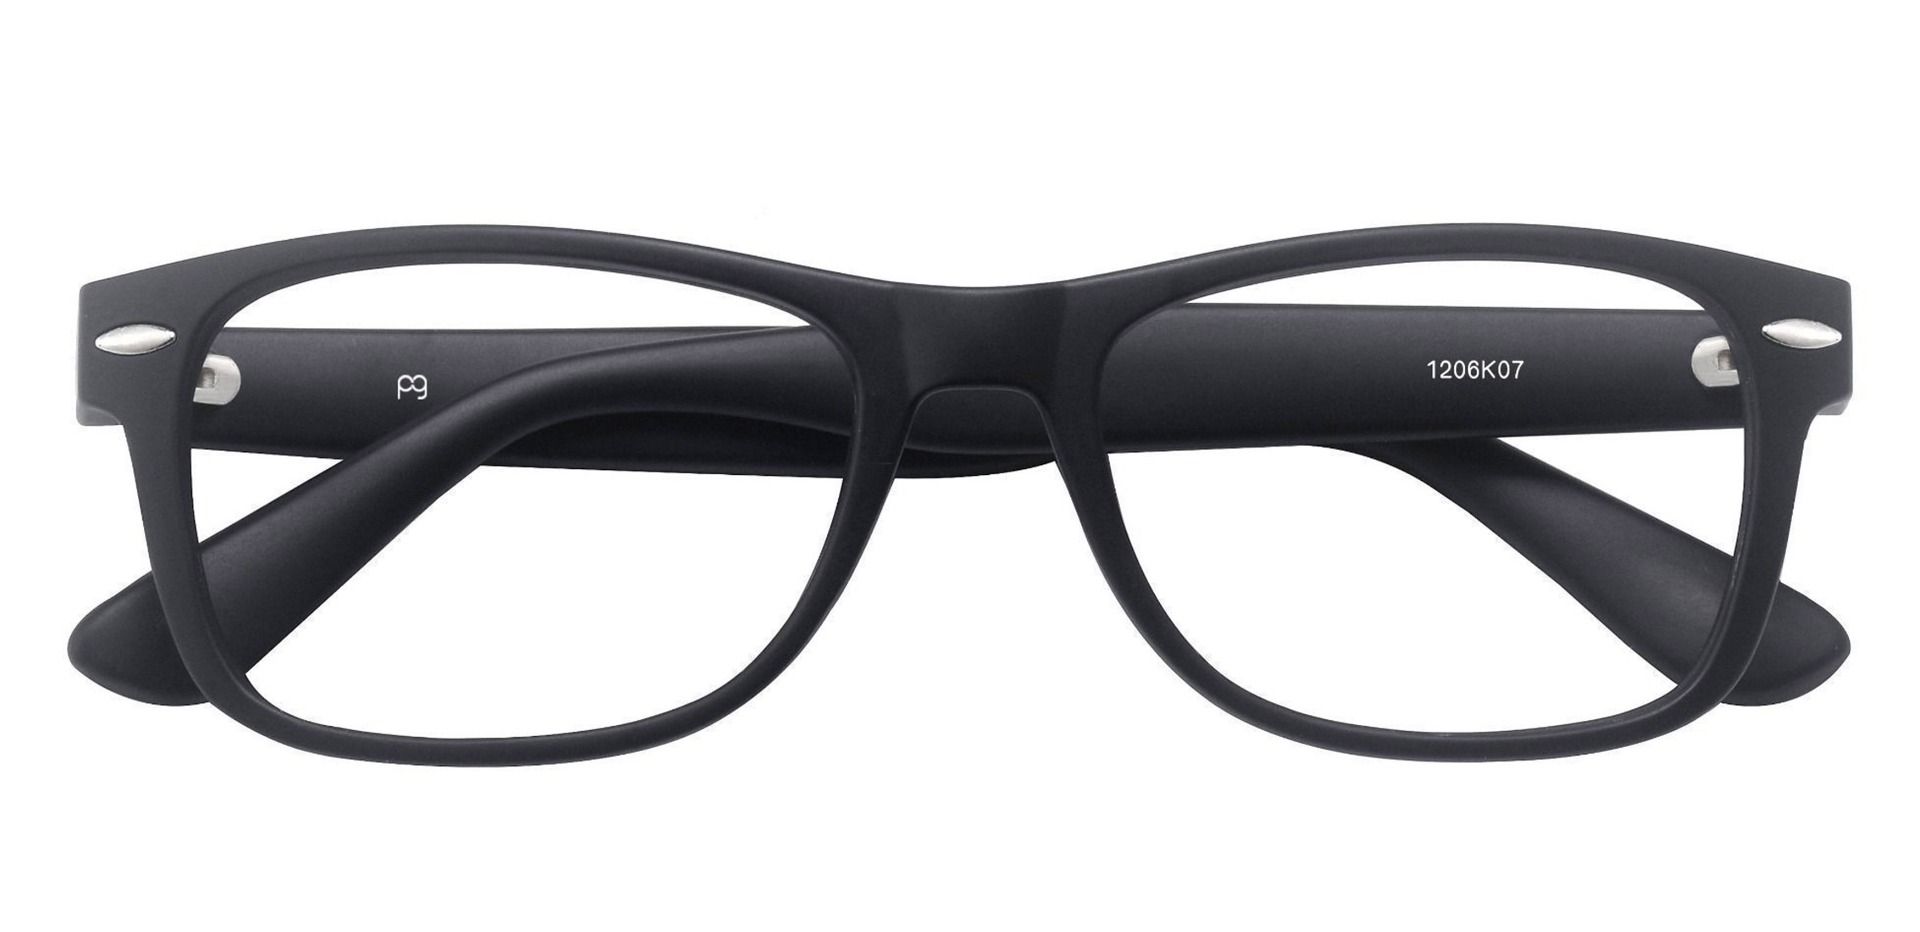 Kent Rectangle Prescription Glasses - Black | Women's Eyeglasses ...